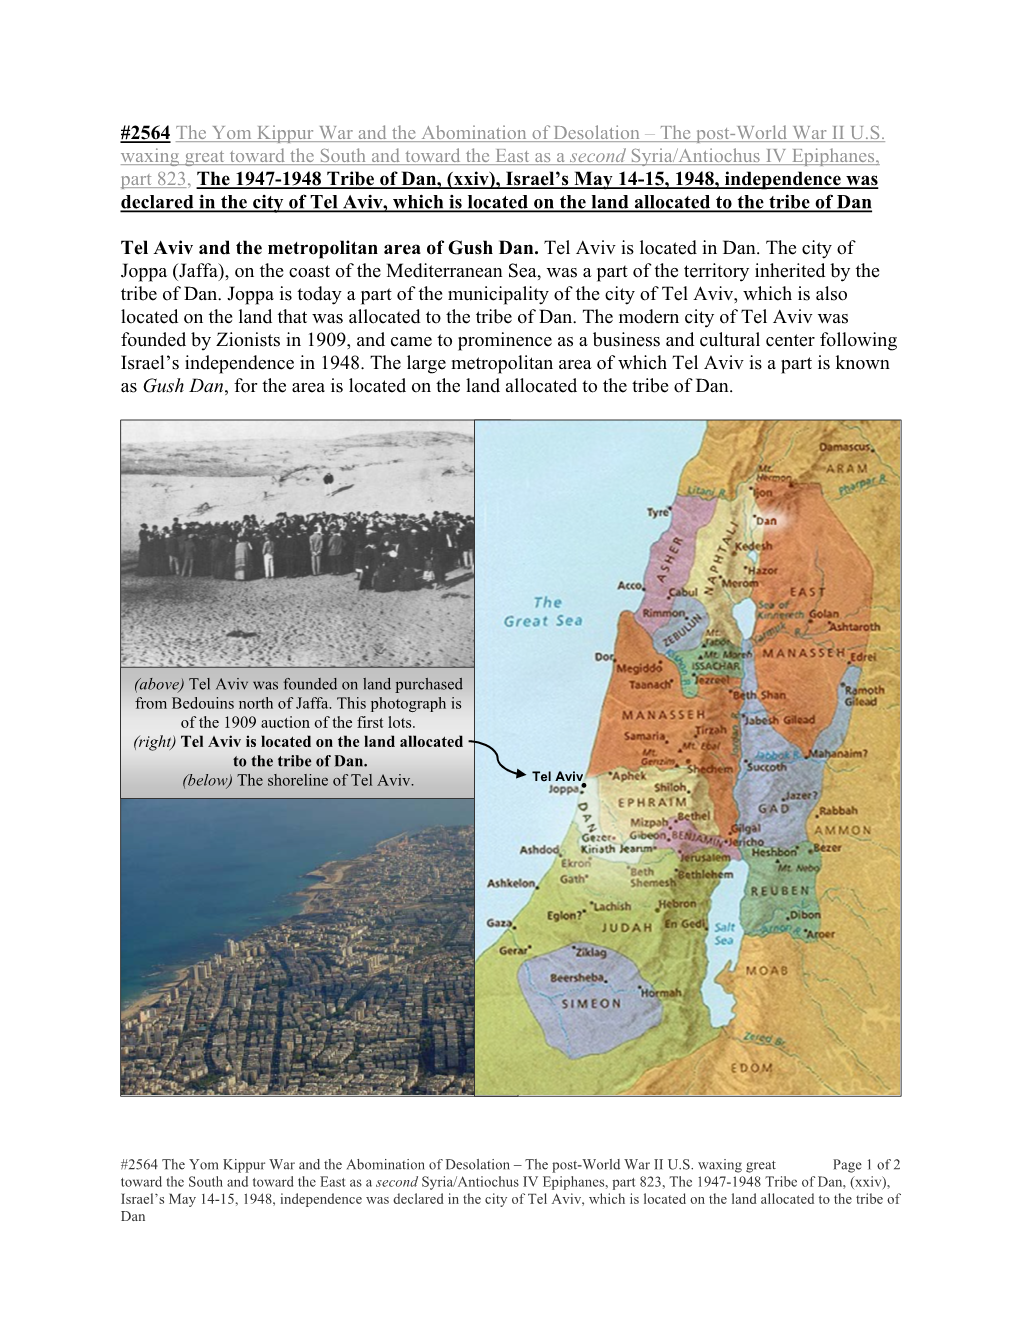 2564 the Yom Kippur War and the Abomination of Desolation – the Post-World War II U.S